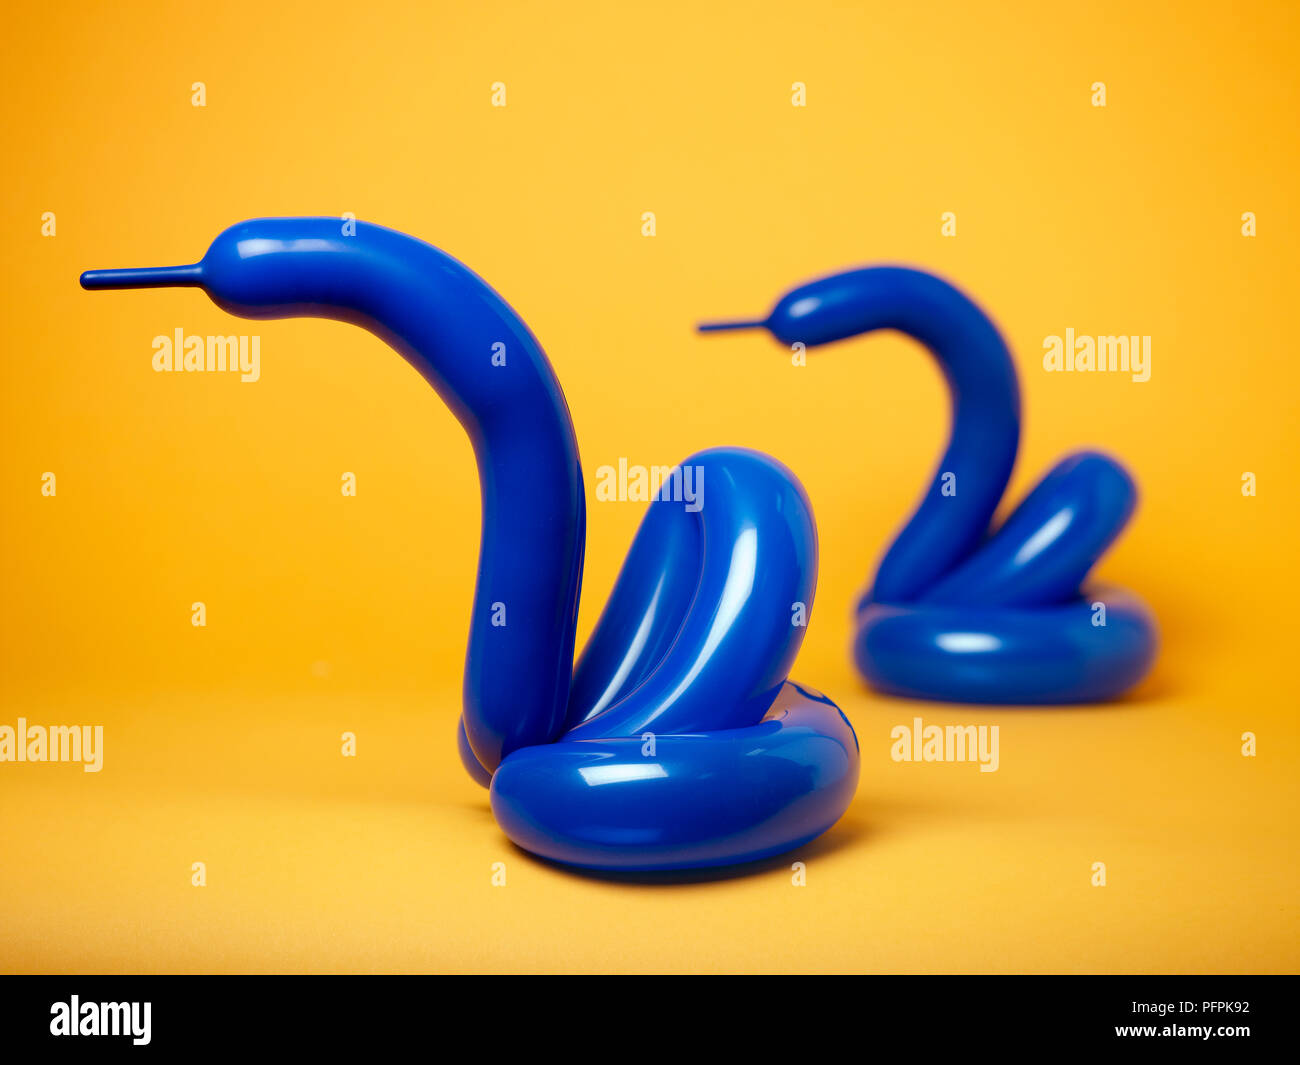 Blue balloon swans on yellow background Stock Photo